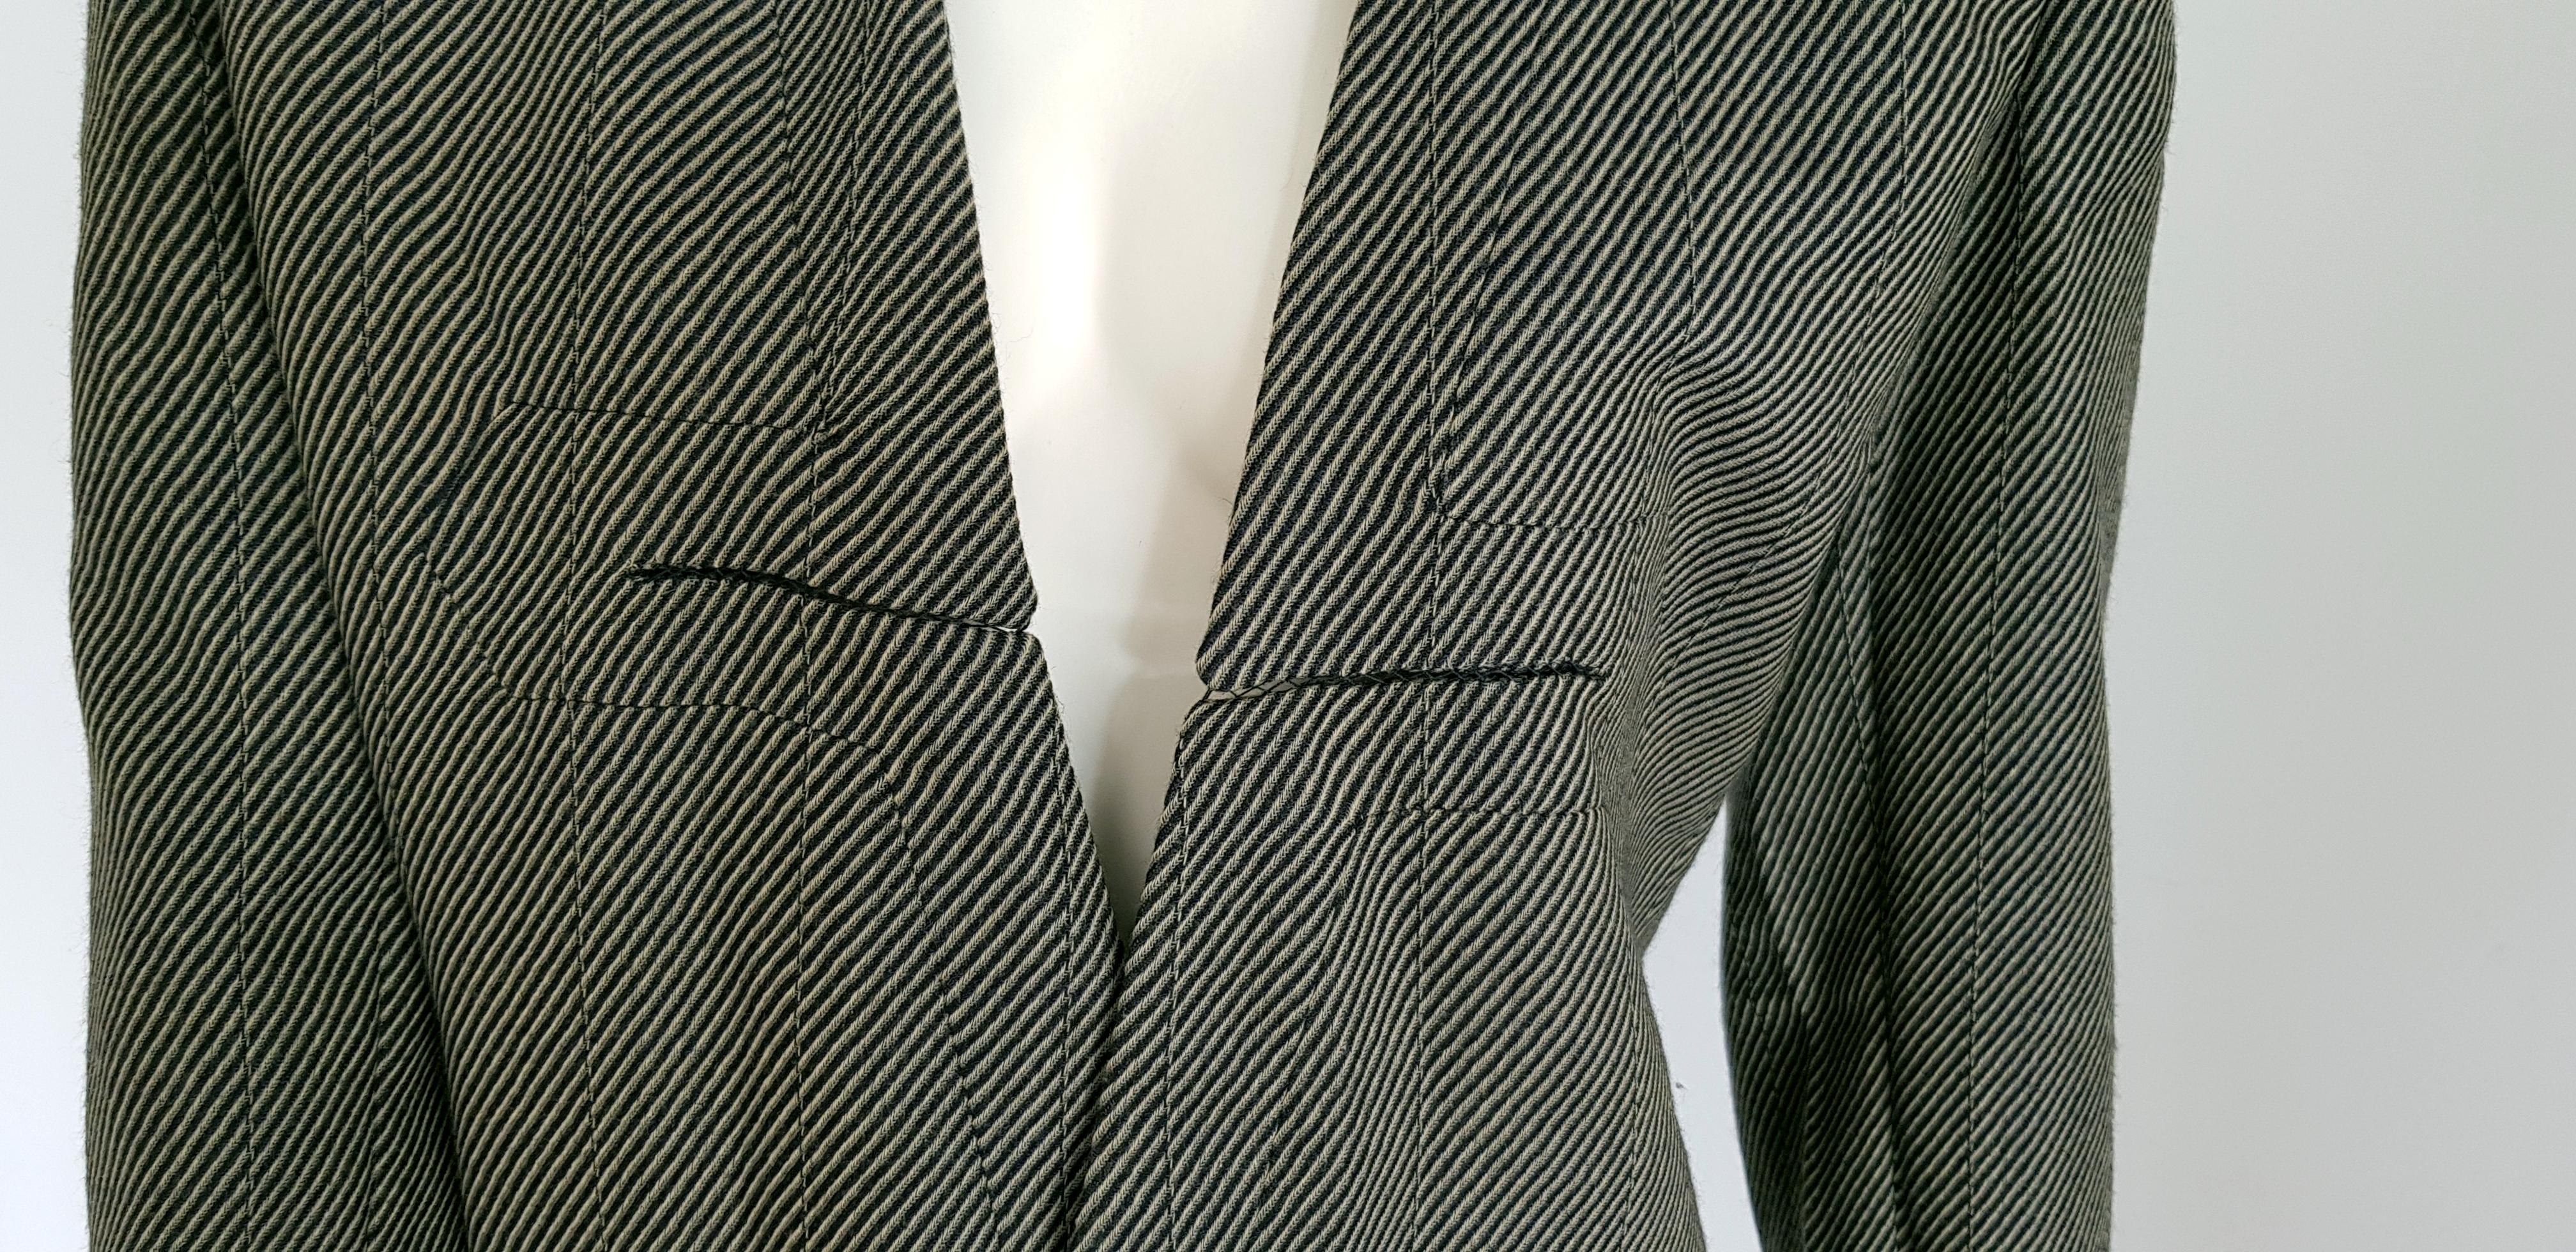 Giorgio ARMANI dark and light grey lines, jacket skirt wool suit - Unworn, New For Sale 3